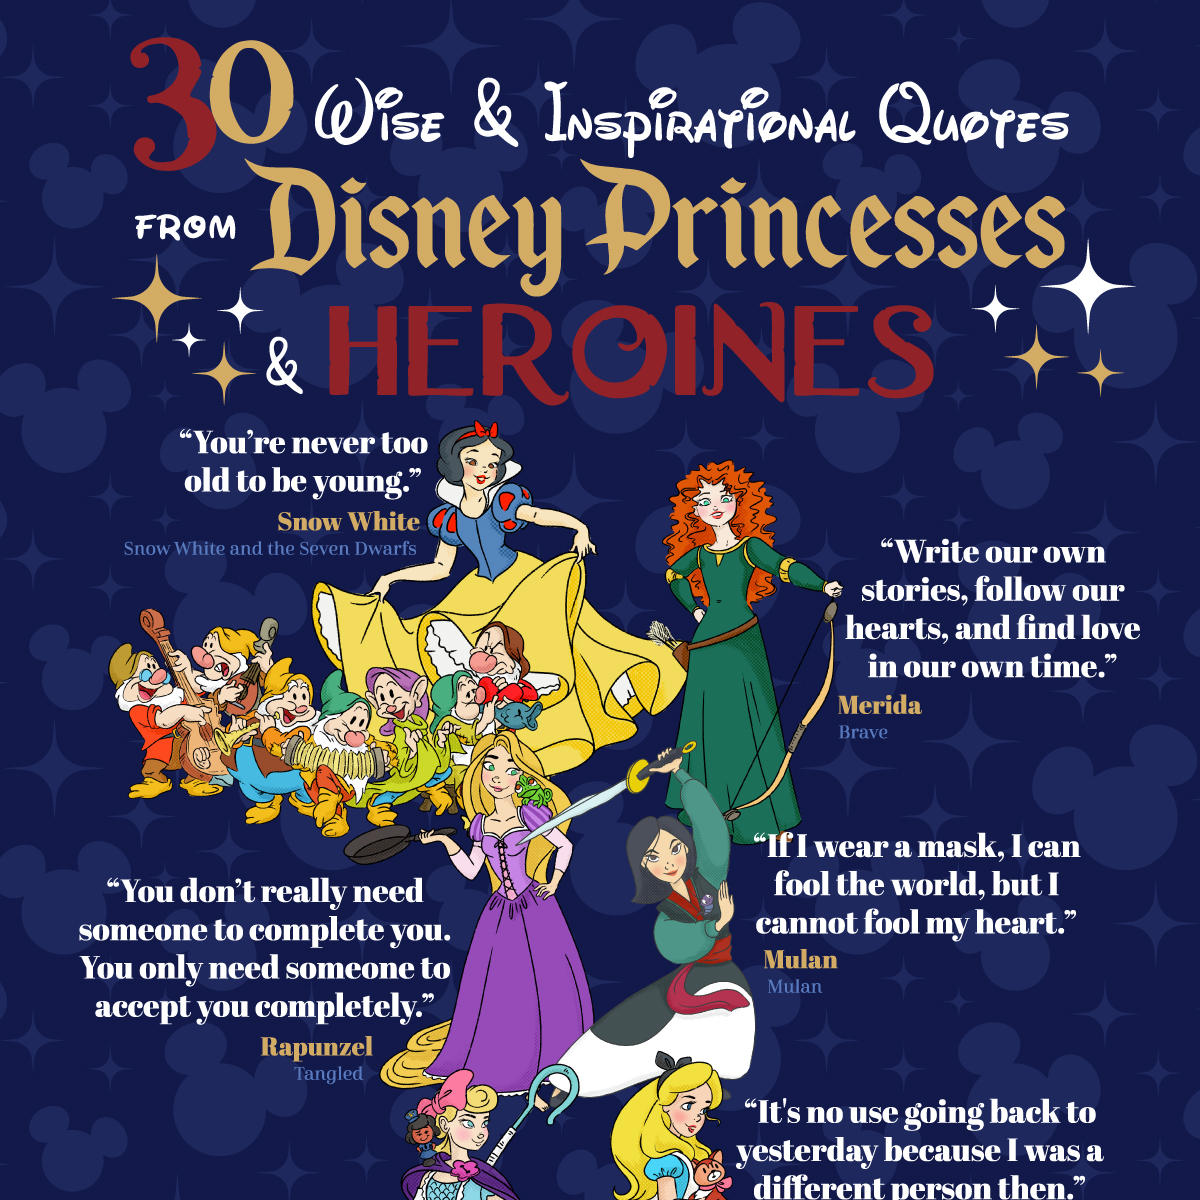 princess quotes and sayings